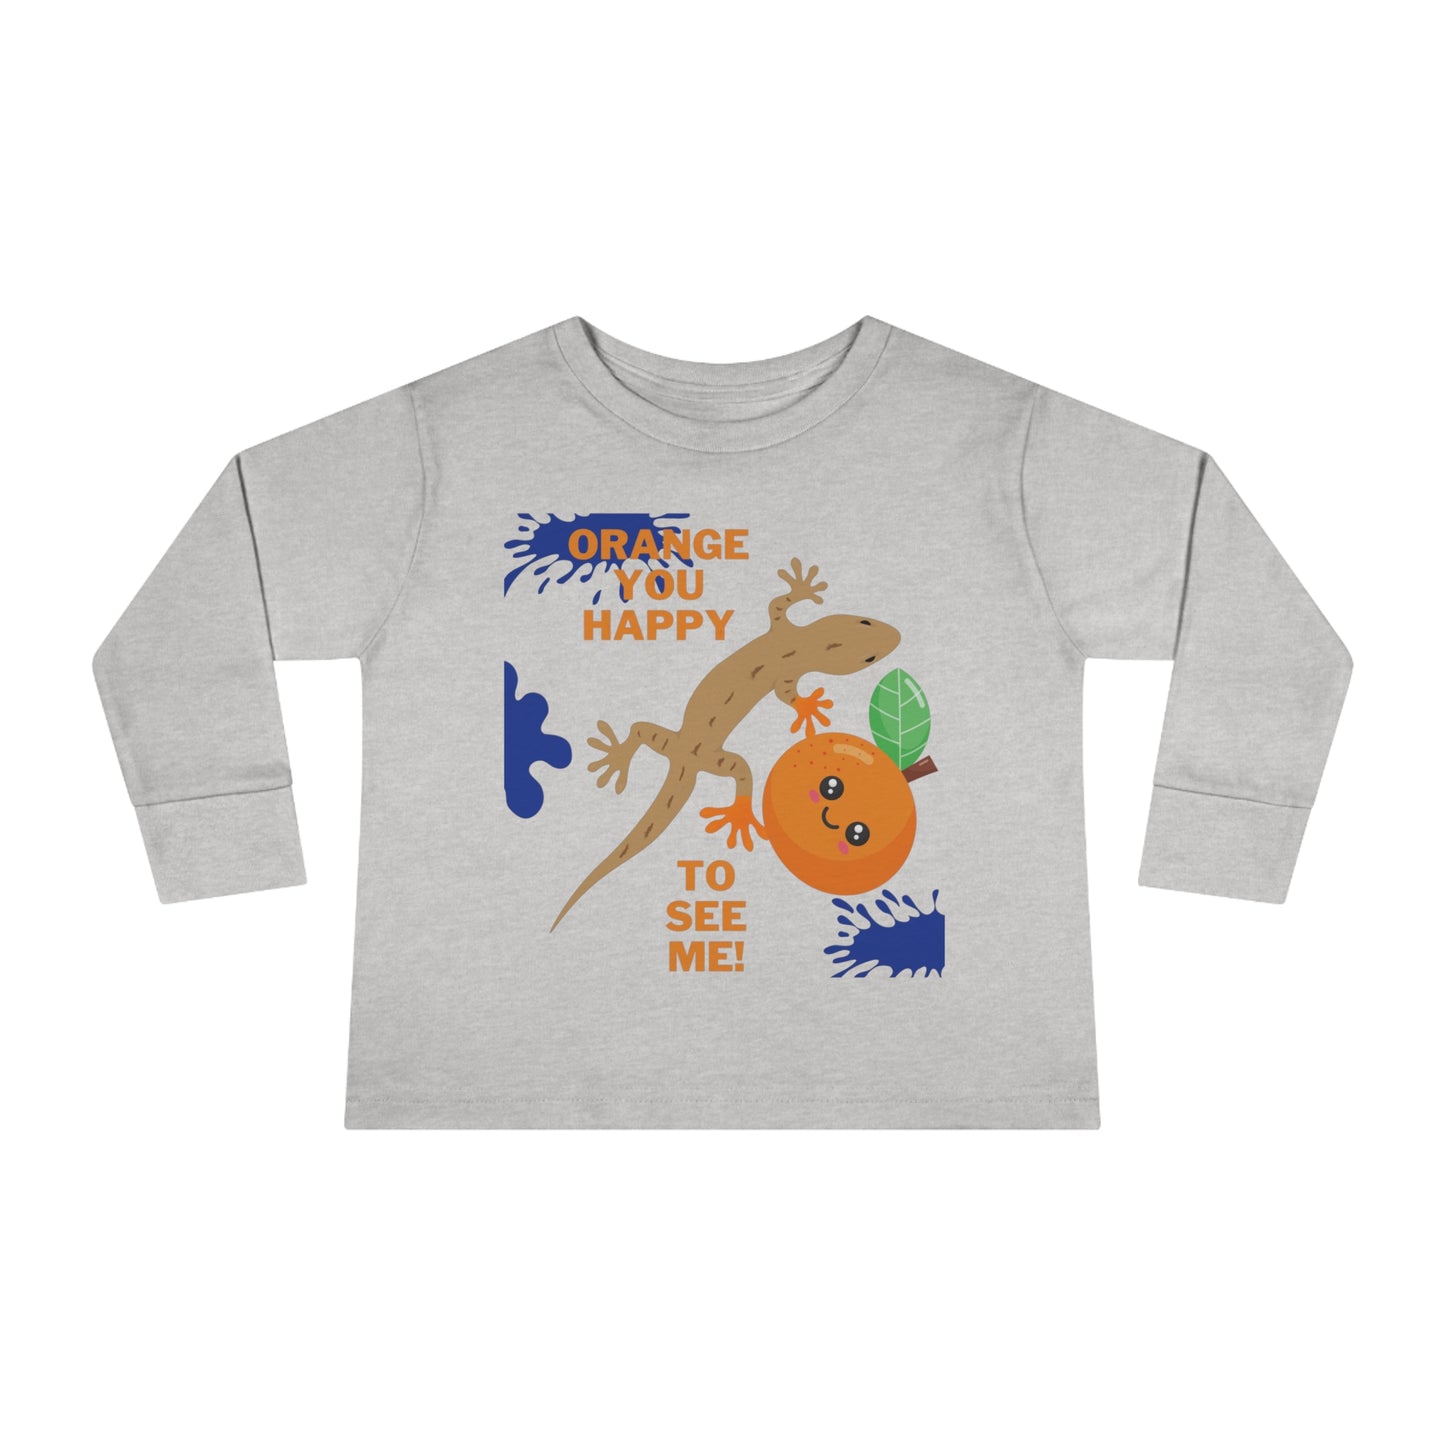 Toddler Long Sleeve Shirt: Orange You Glad to See Me